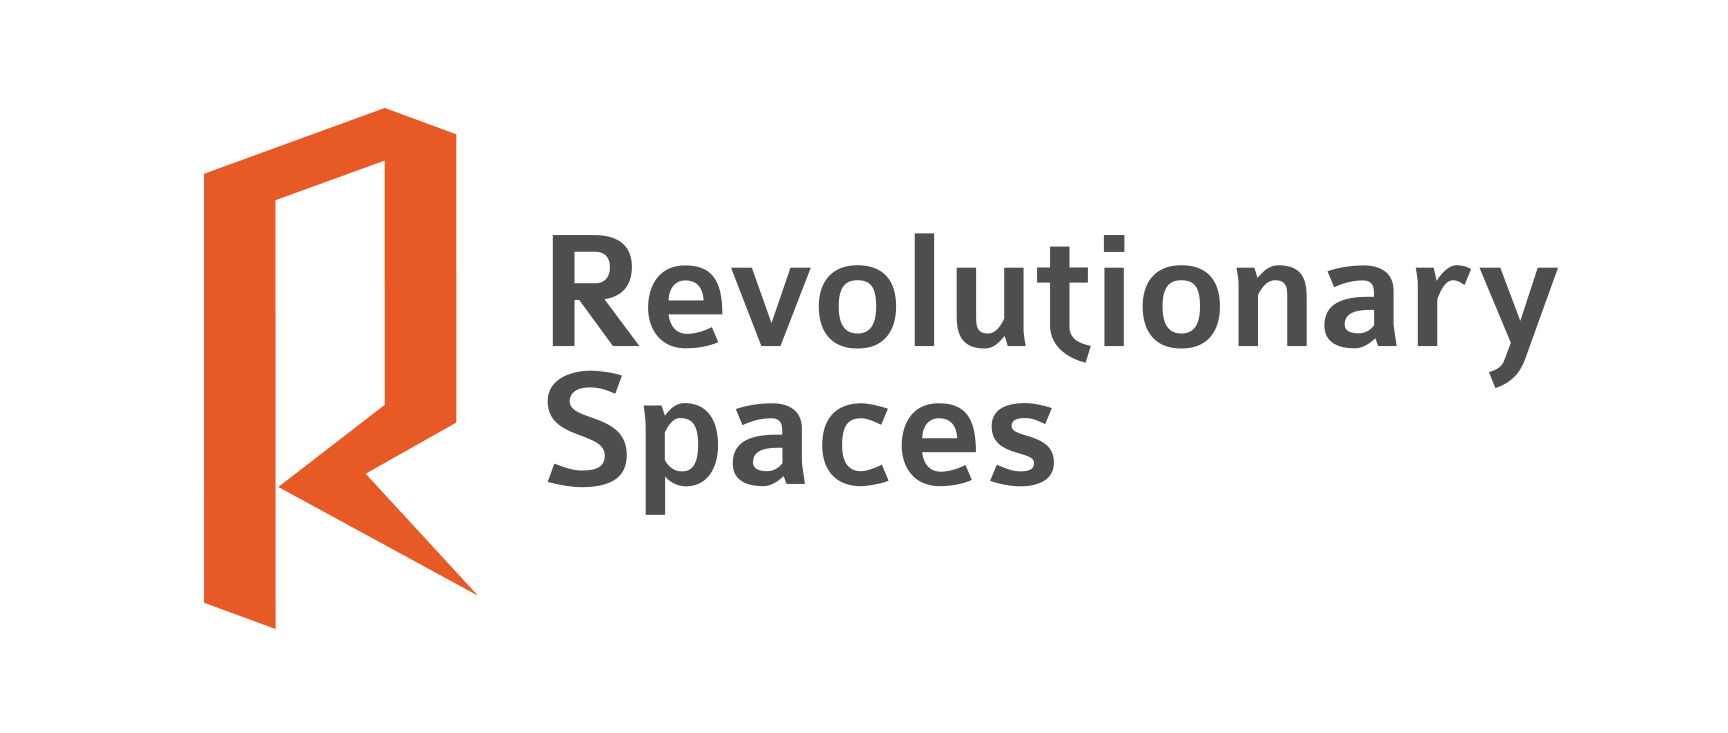 Revolutionary Spaces